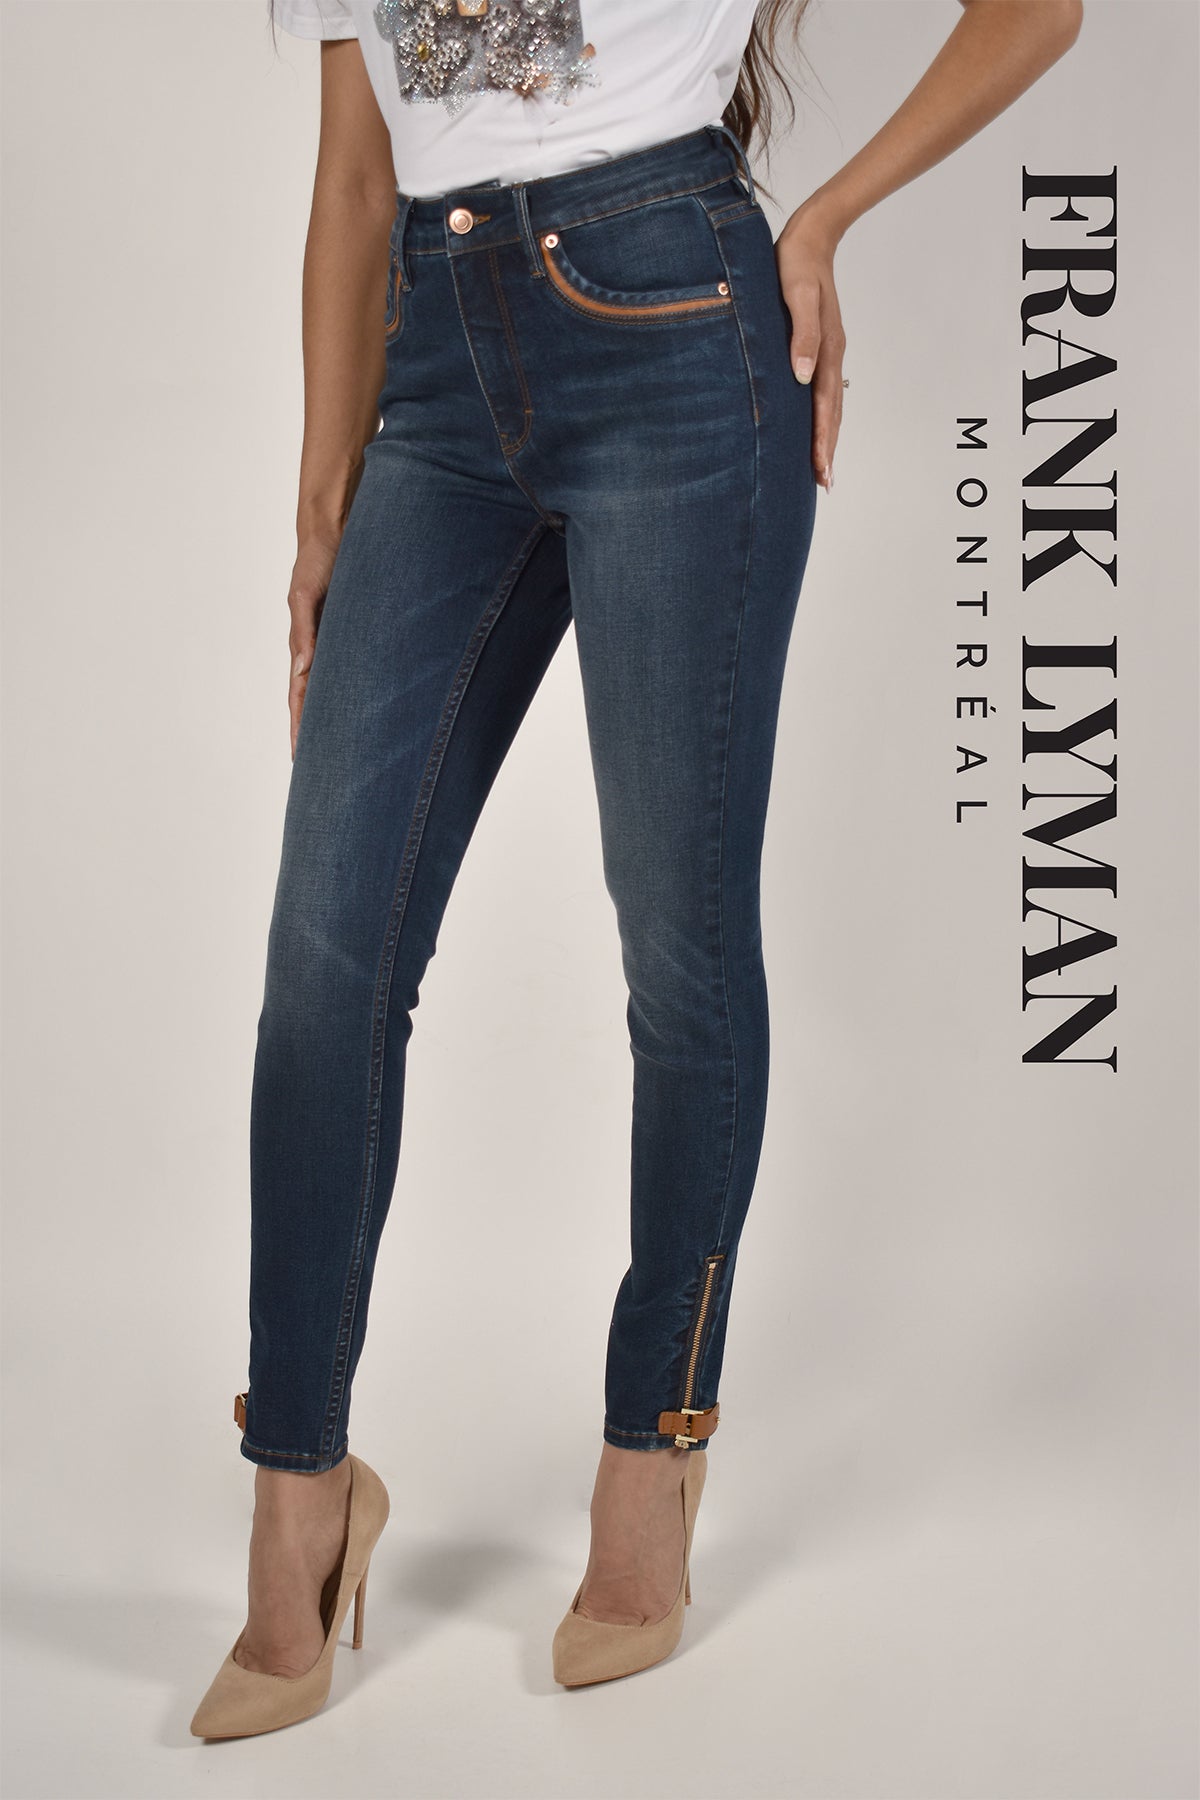 Frank Lyman Montreal Zipper Jeans-Buy Frank Lyman Montreal Jeans Online-Frank Lyman Montreal Blue Jeans-Frank Lyman Montreal Online Jean Shop